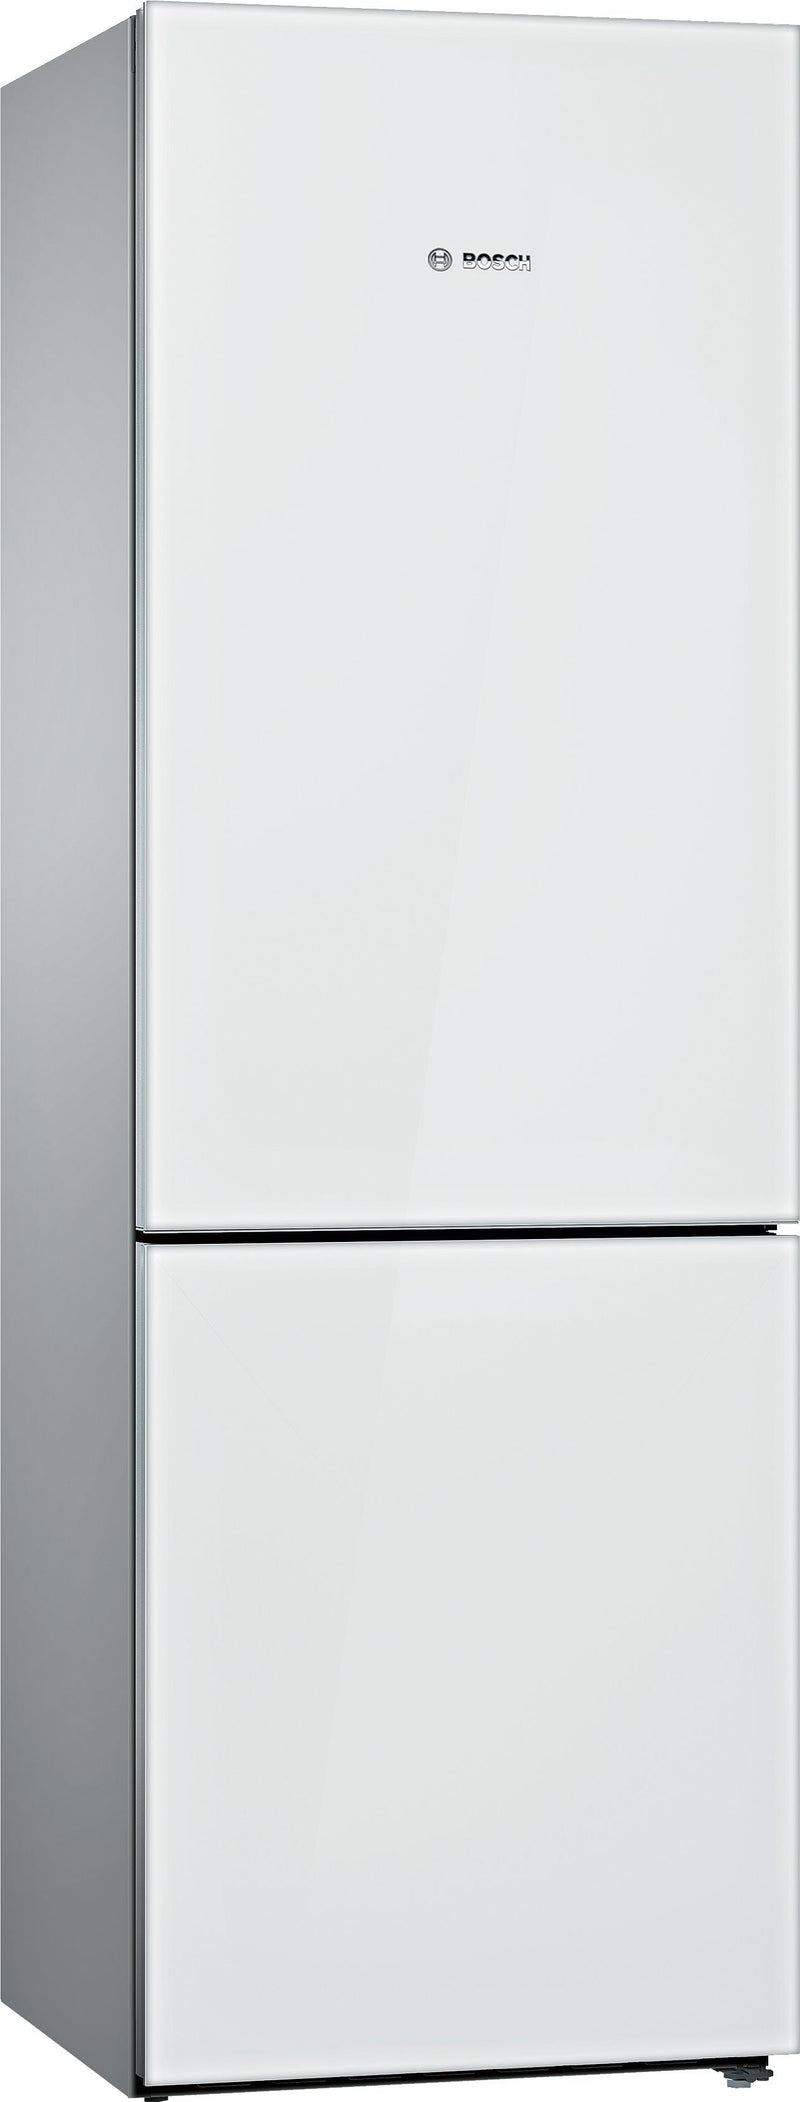 Bosch White Glass 800 Series 24-inch Counter-Depth Bottom Freezer Refrigerator (10 Cu.Ft.) - B10CB81NVW